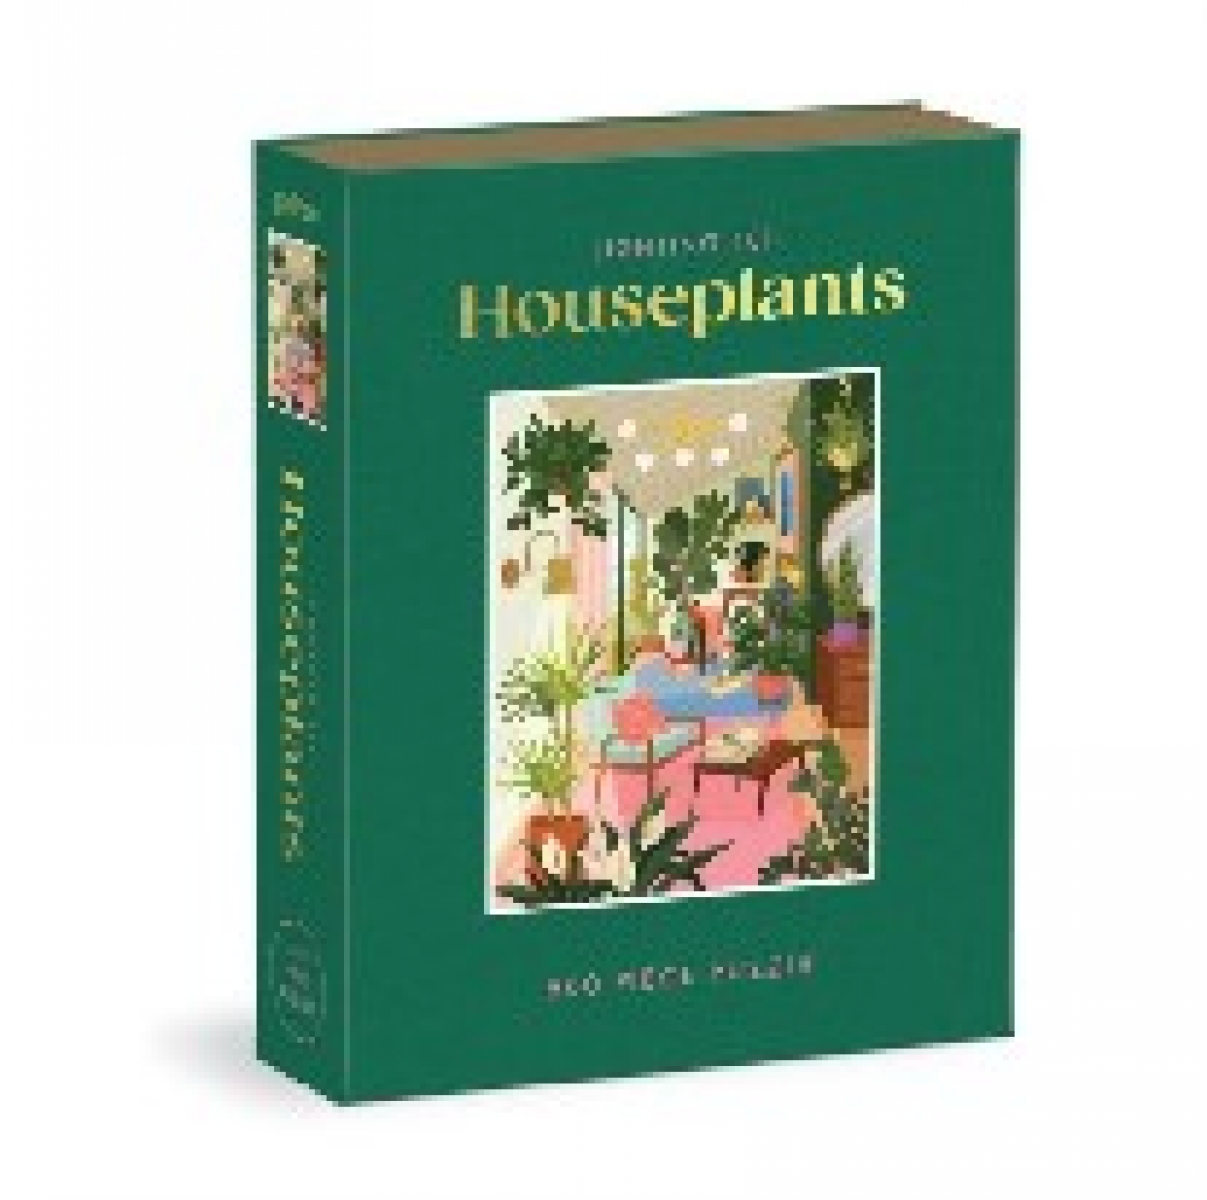 Galison Lighting 101: houseplants 500 piece book puzzle 